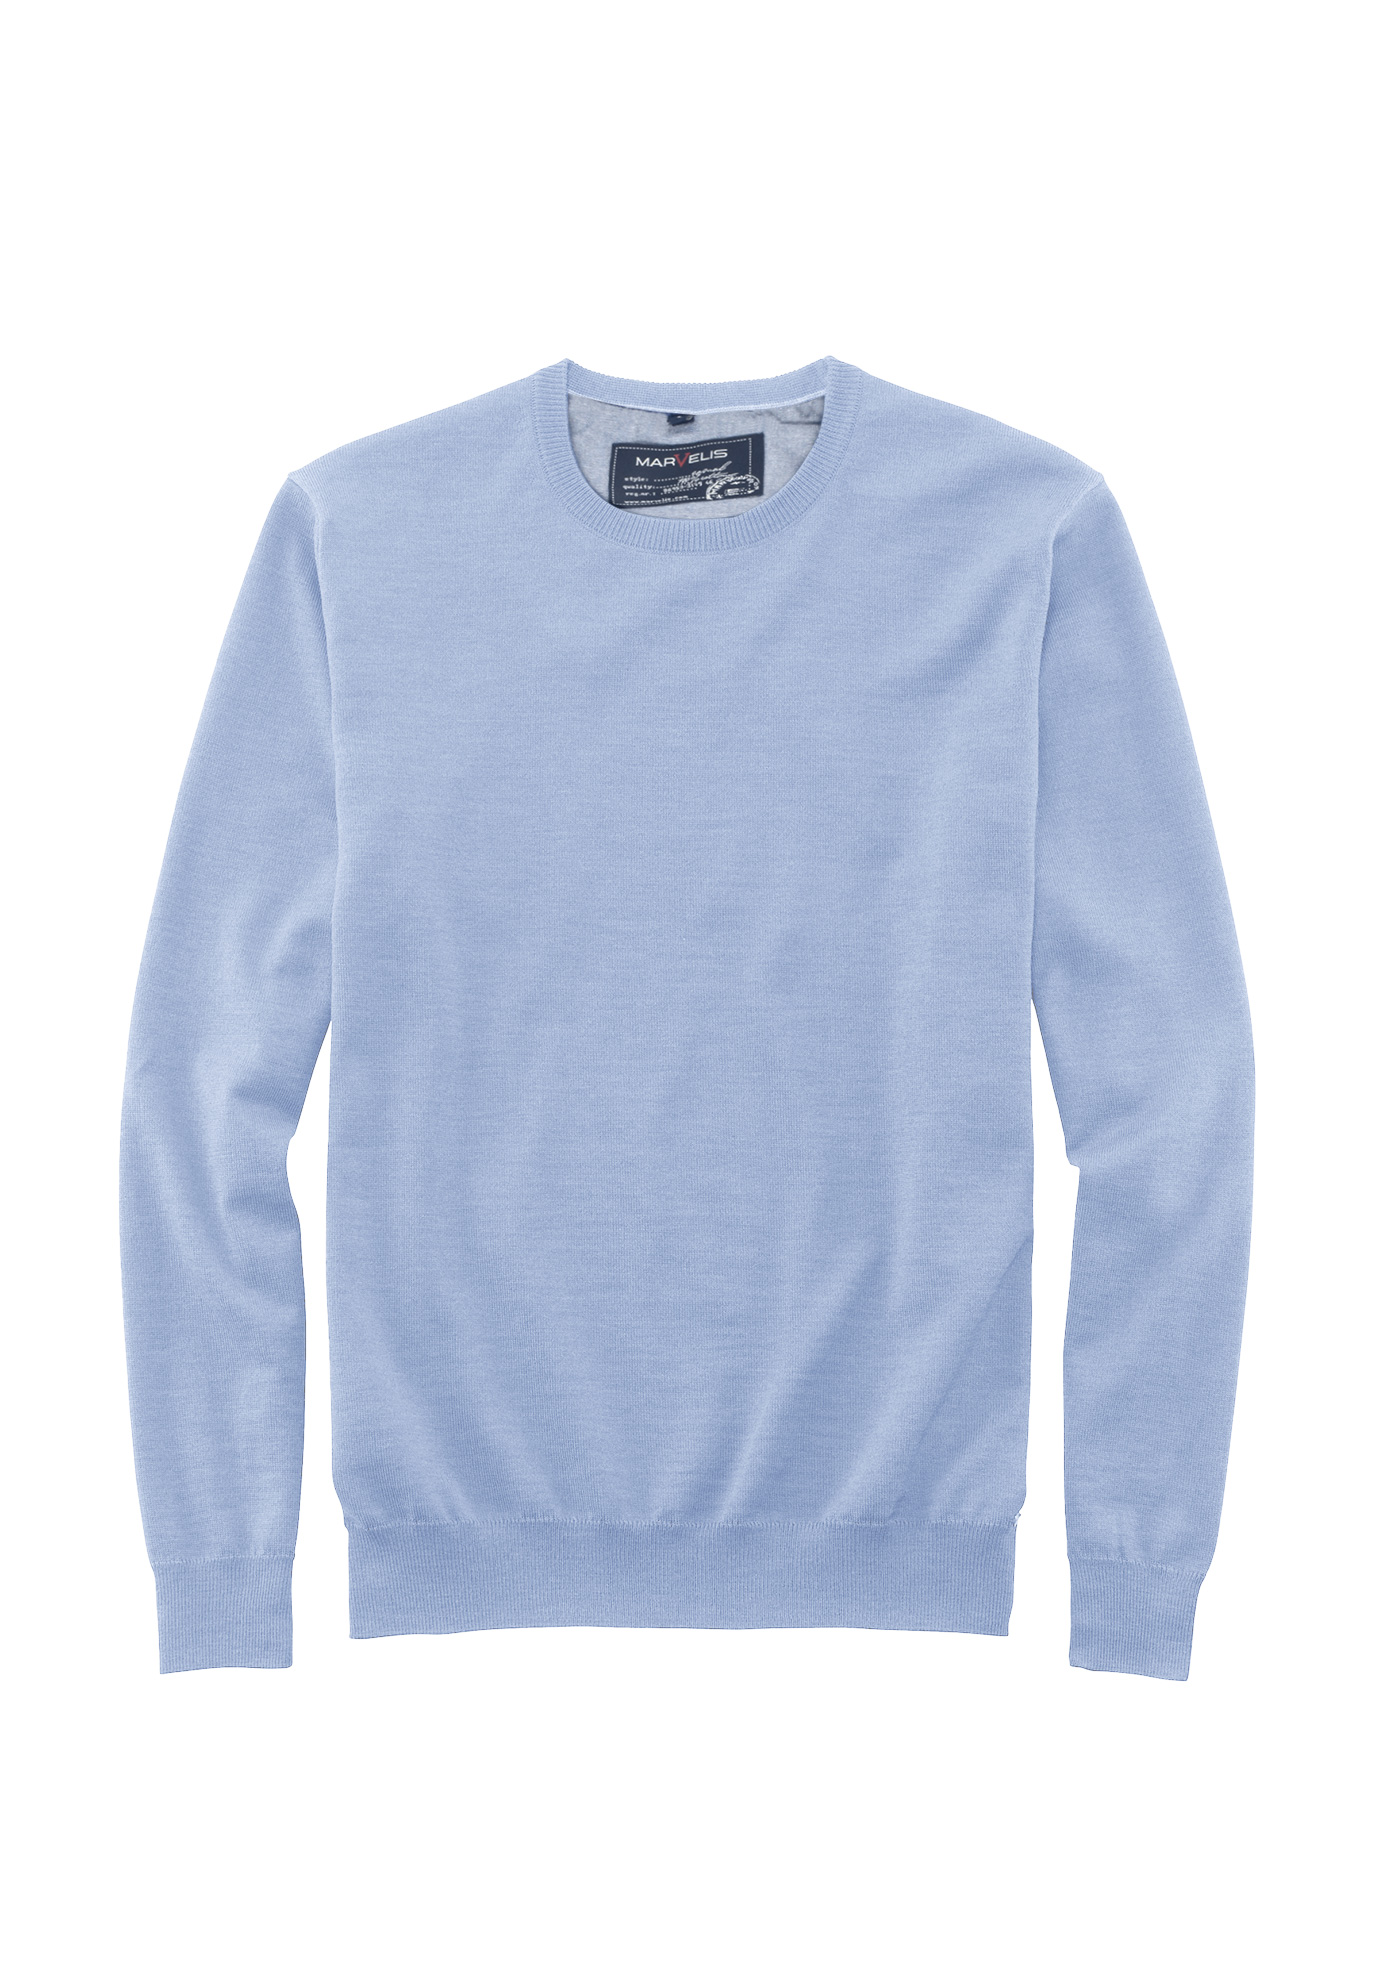 Пуловер MARVELIS, светло синий жакет на пуговицах marvelis marvelis размер xl цвет серый арт 63151660